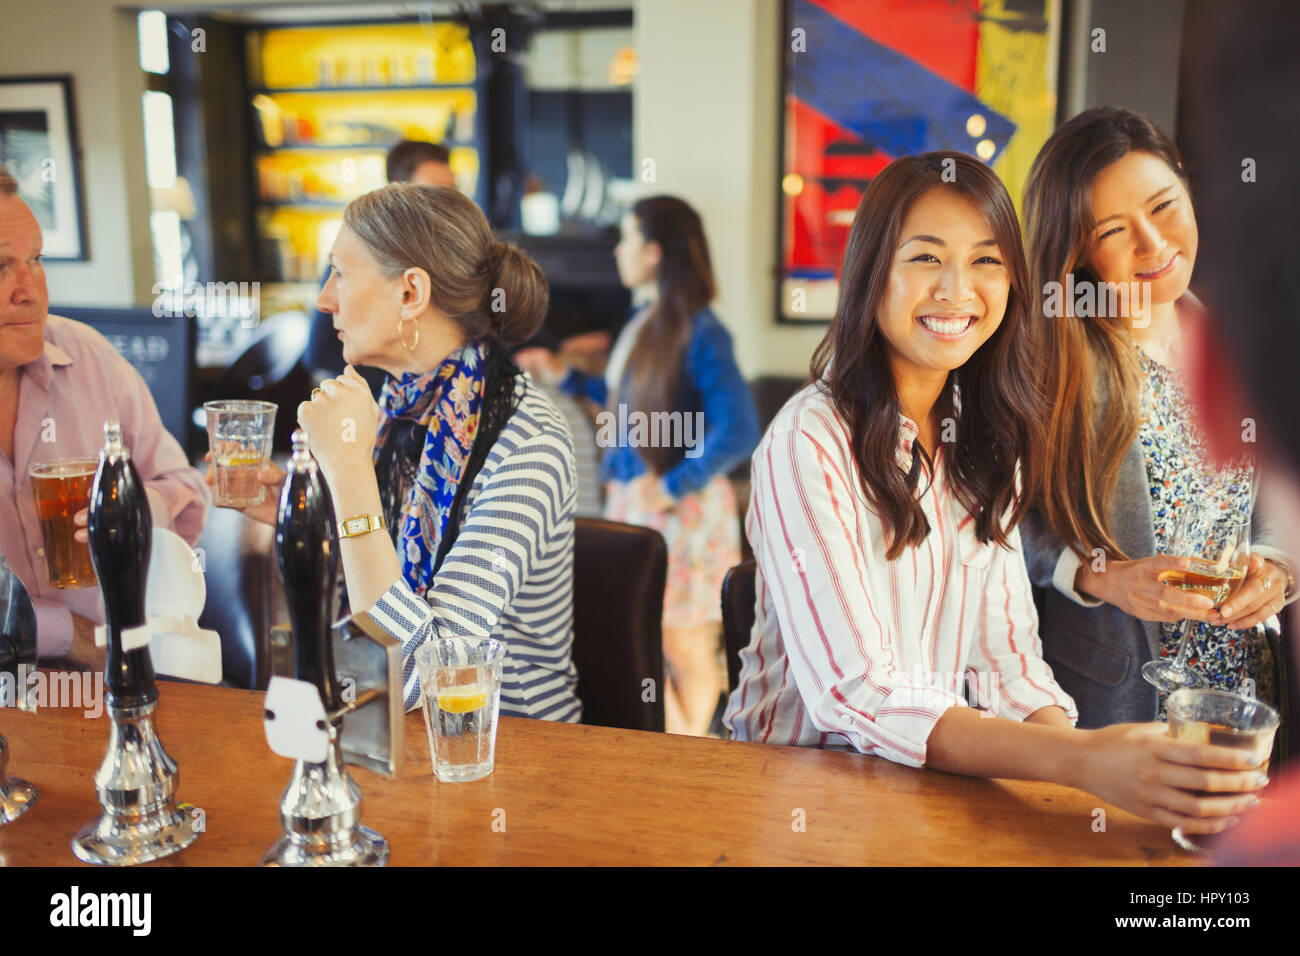 Women smiling at bartender and drinking at bar Stock Photo